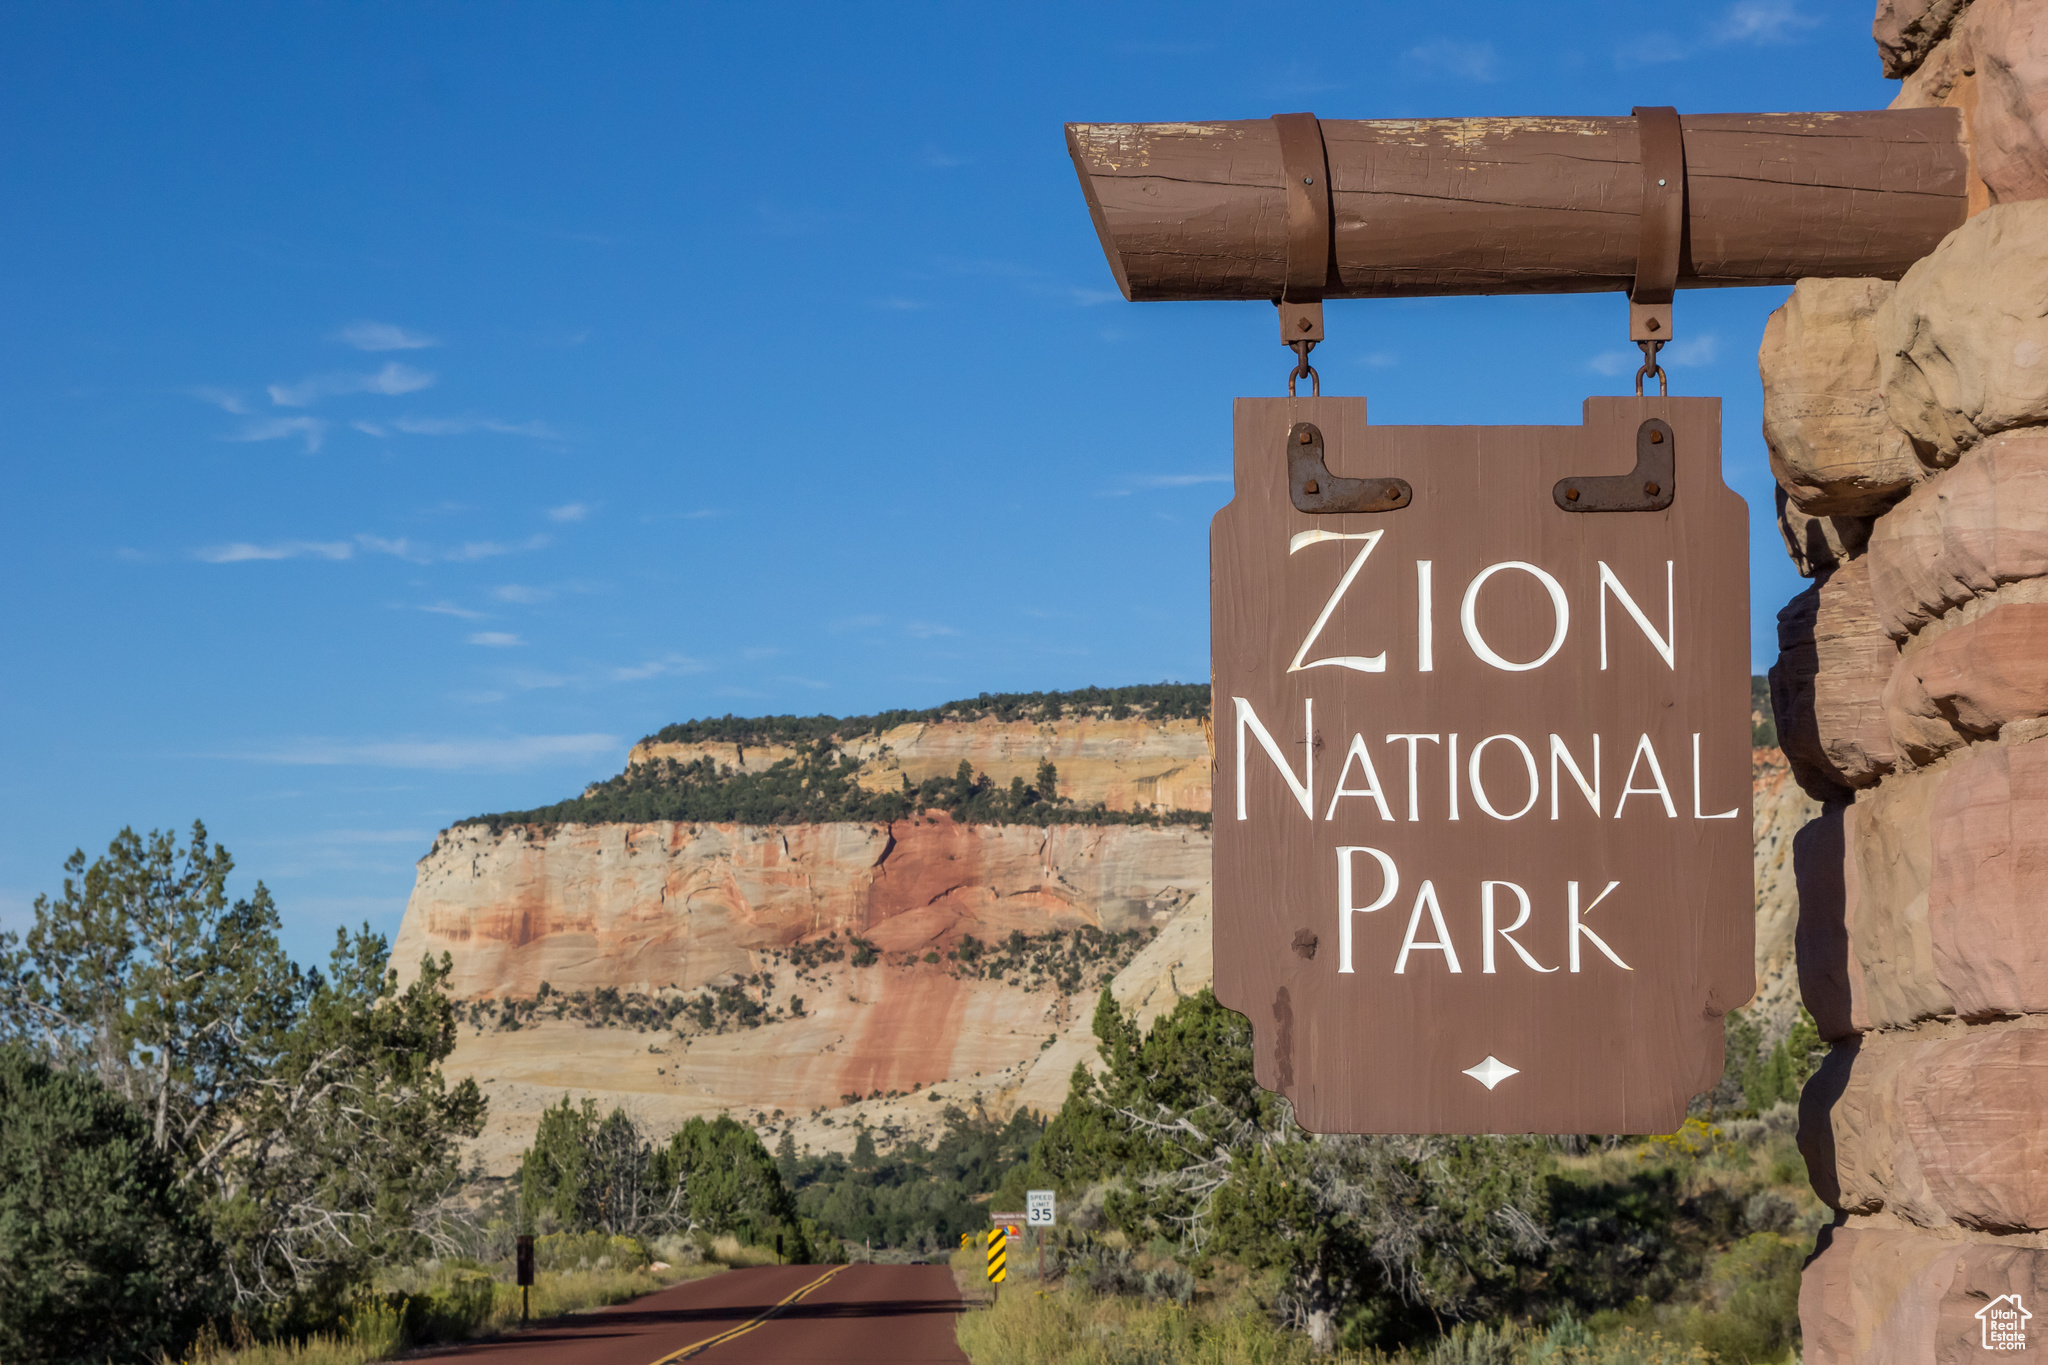 Zion National Park. 30 minute drive